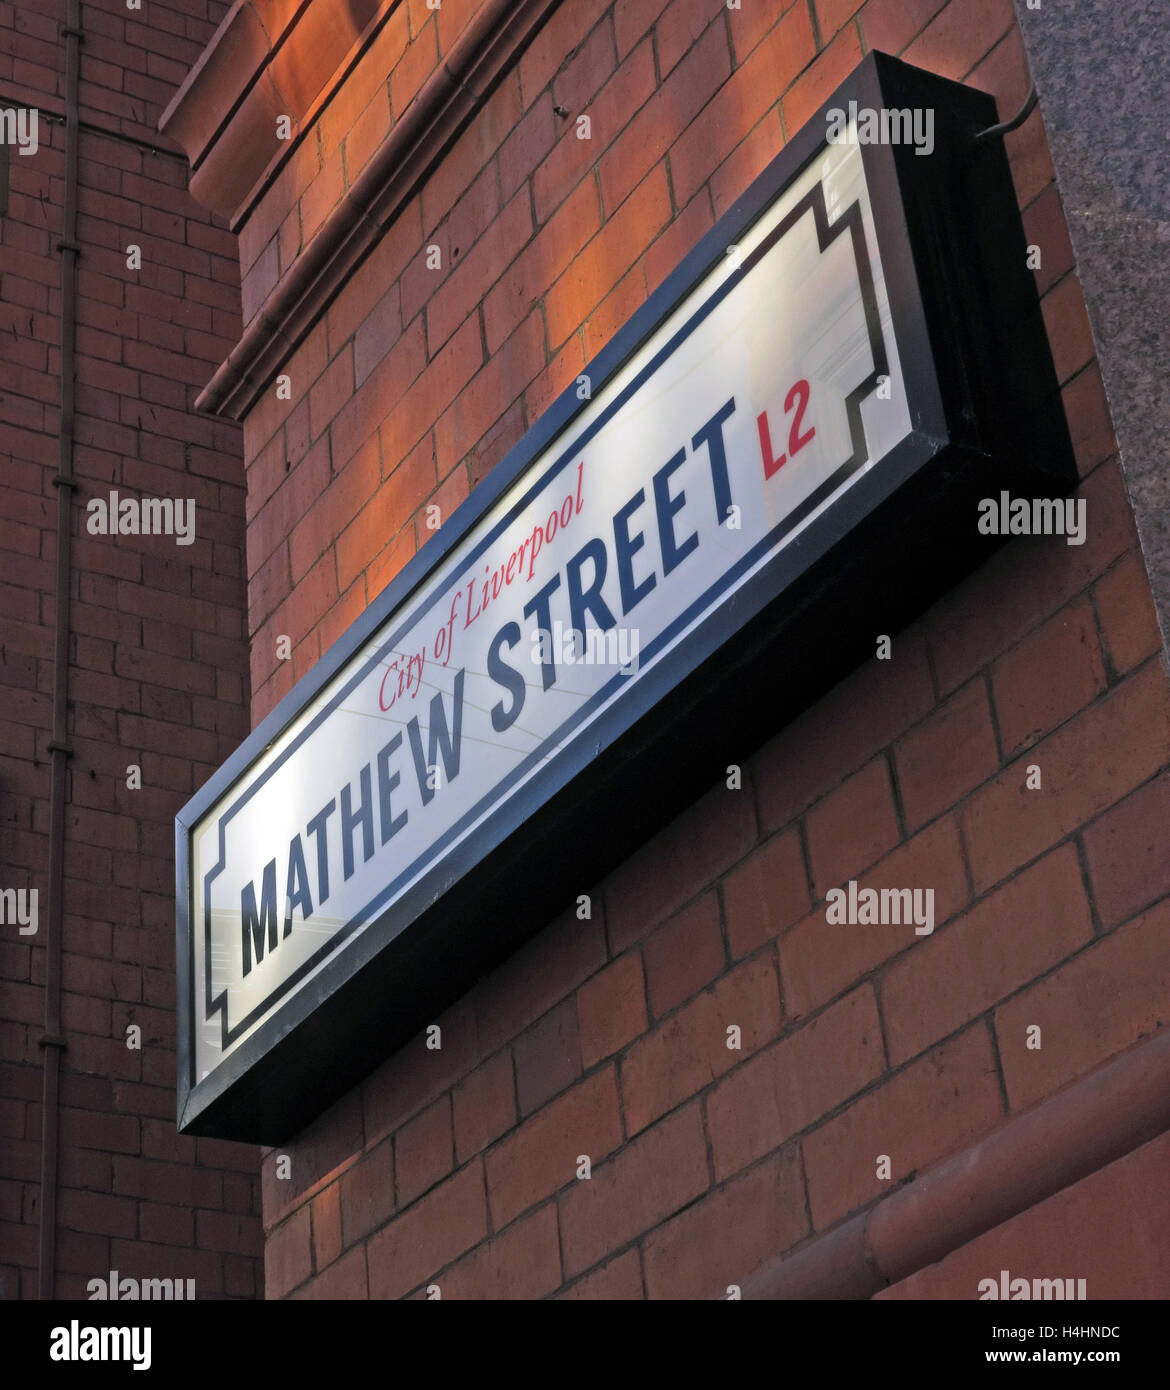 Mathew Street,Beatles Cavern de Liverpool Merseyside,promenades,Angleterre, Banque D'Images